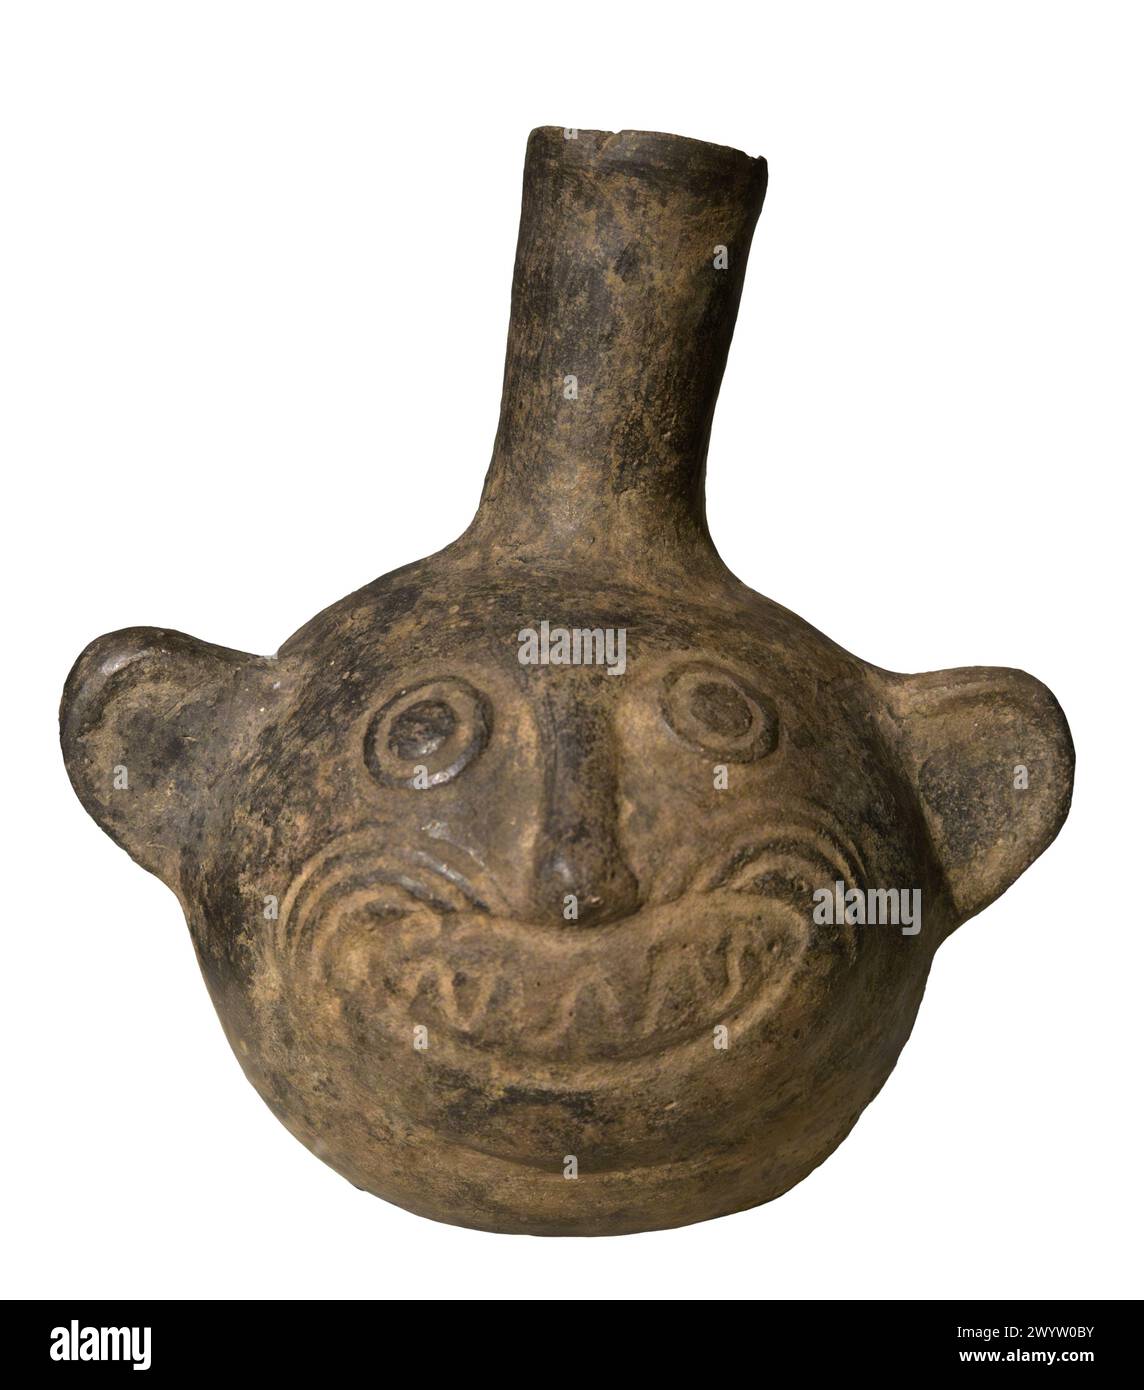 Keramisches Flaschengefäß Huacos der Moche-Kultur. Stockfoto